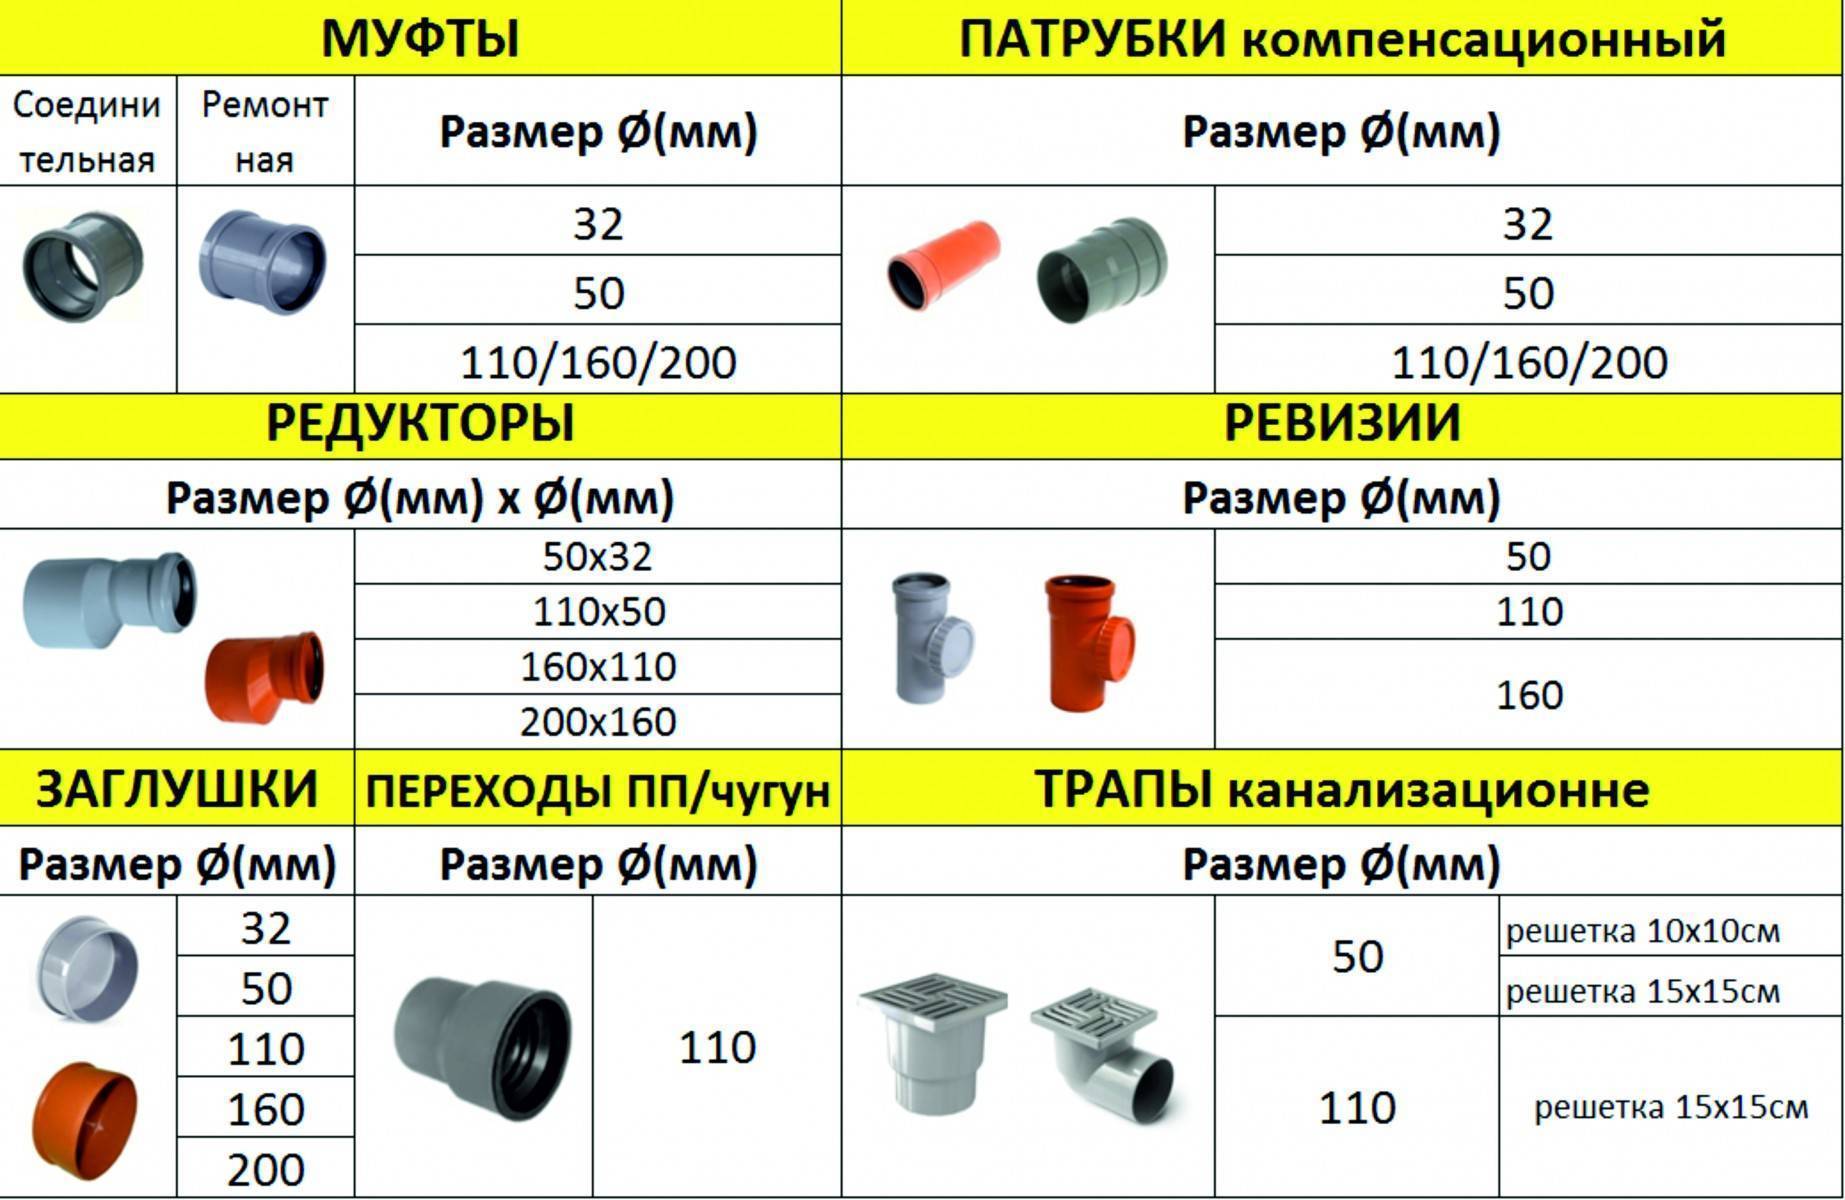 Труба канализационная пластиковая: размеры, диаметры, виды